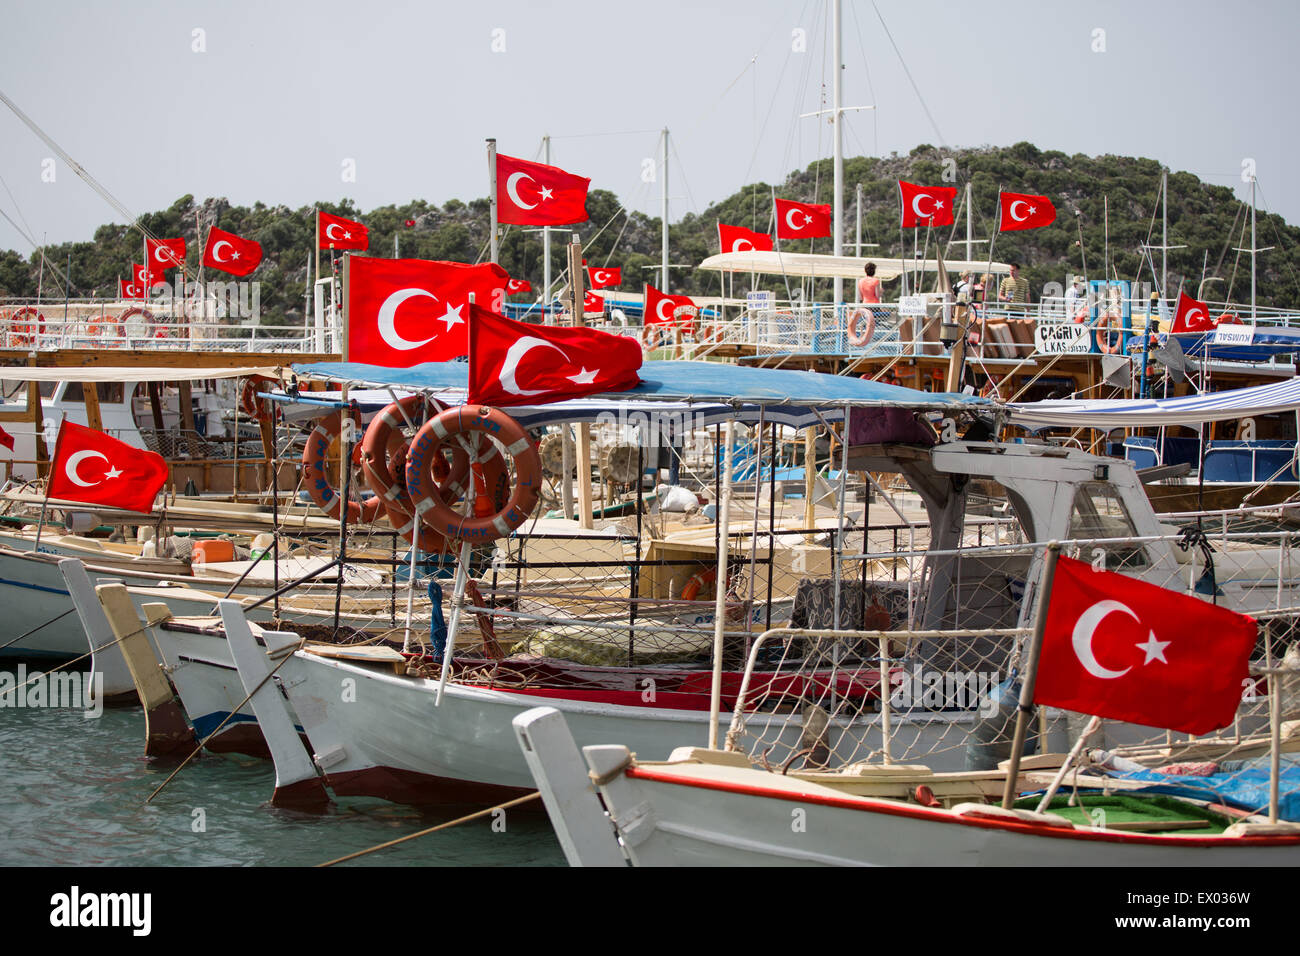 Harbor boats with Turkish flags, Kalekoy, Lycian way, Kalekoy, Demre, Simena, Turkey Stock Photo